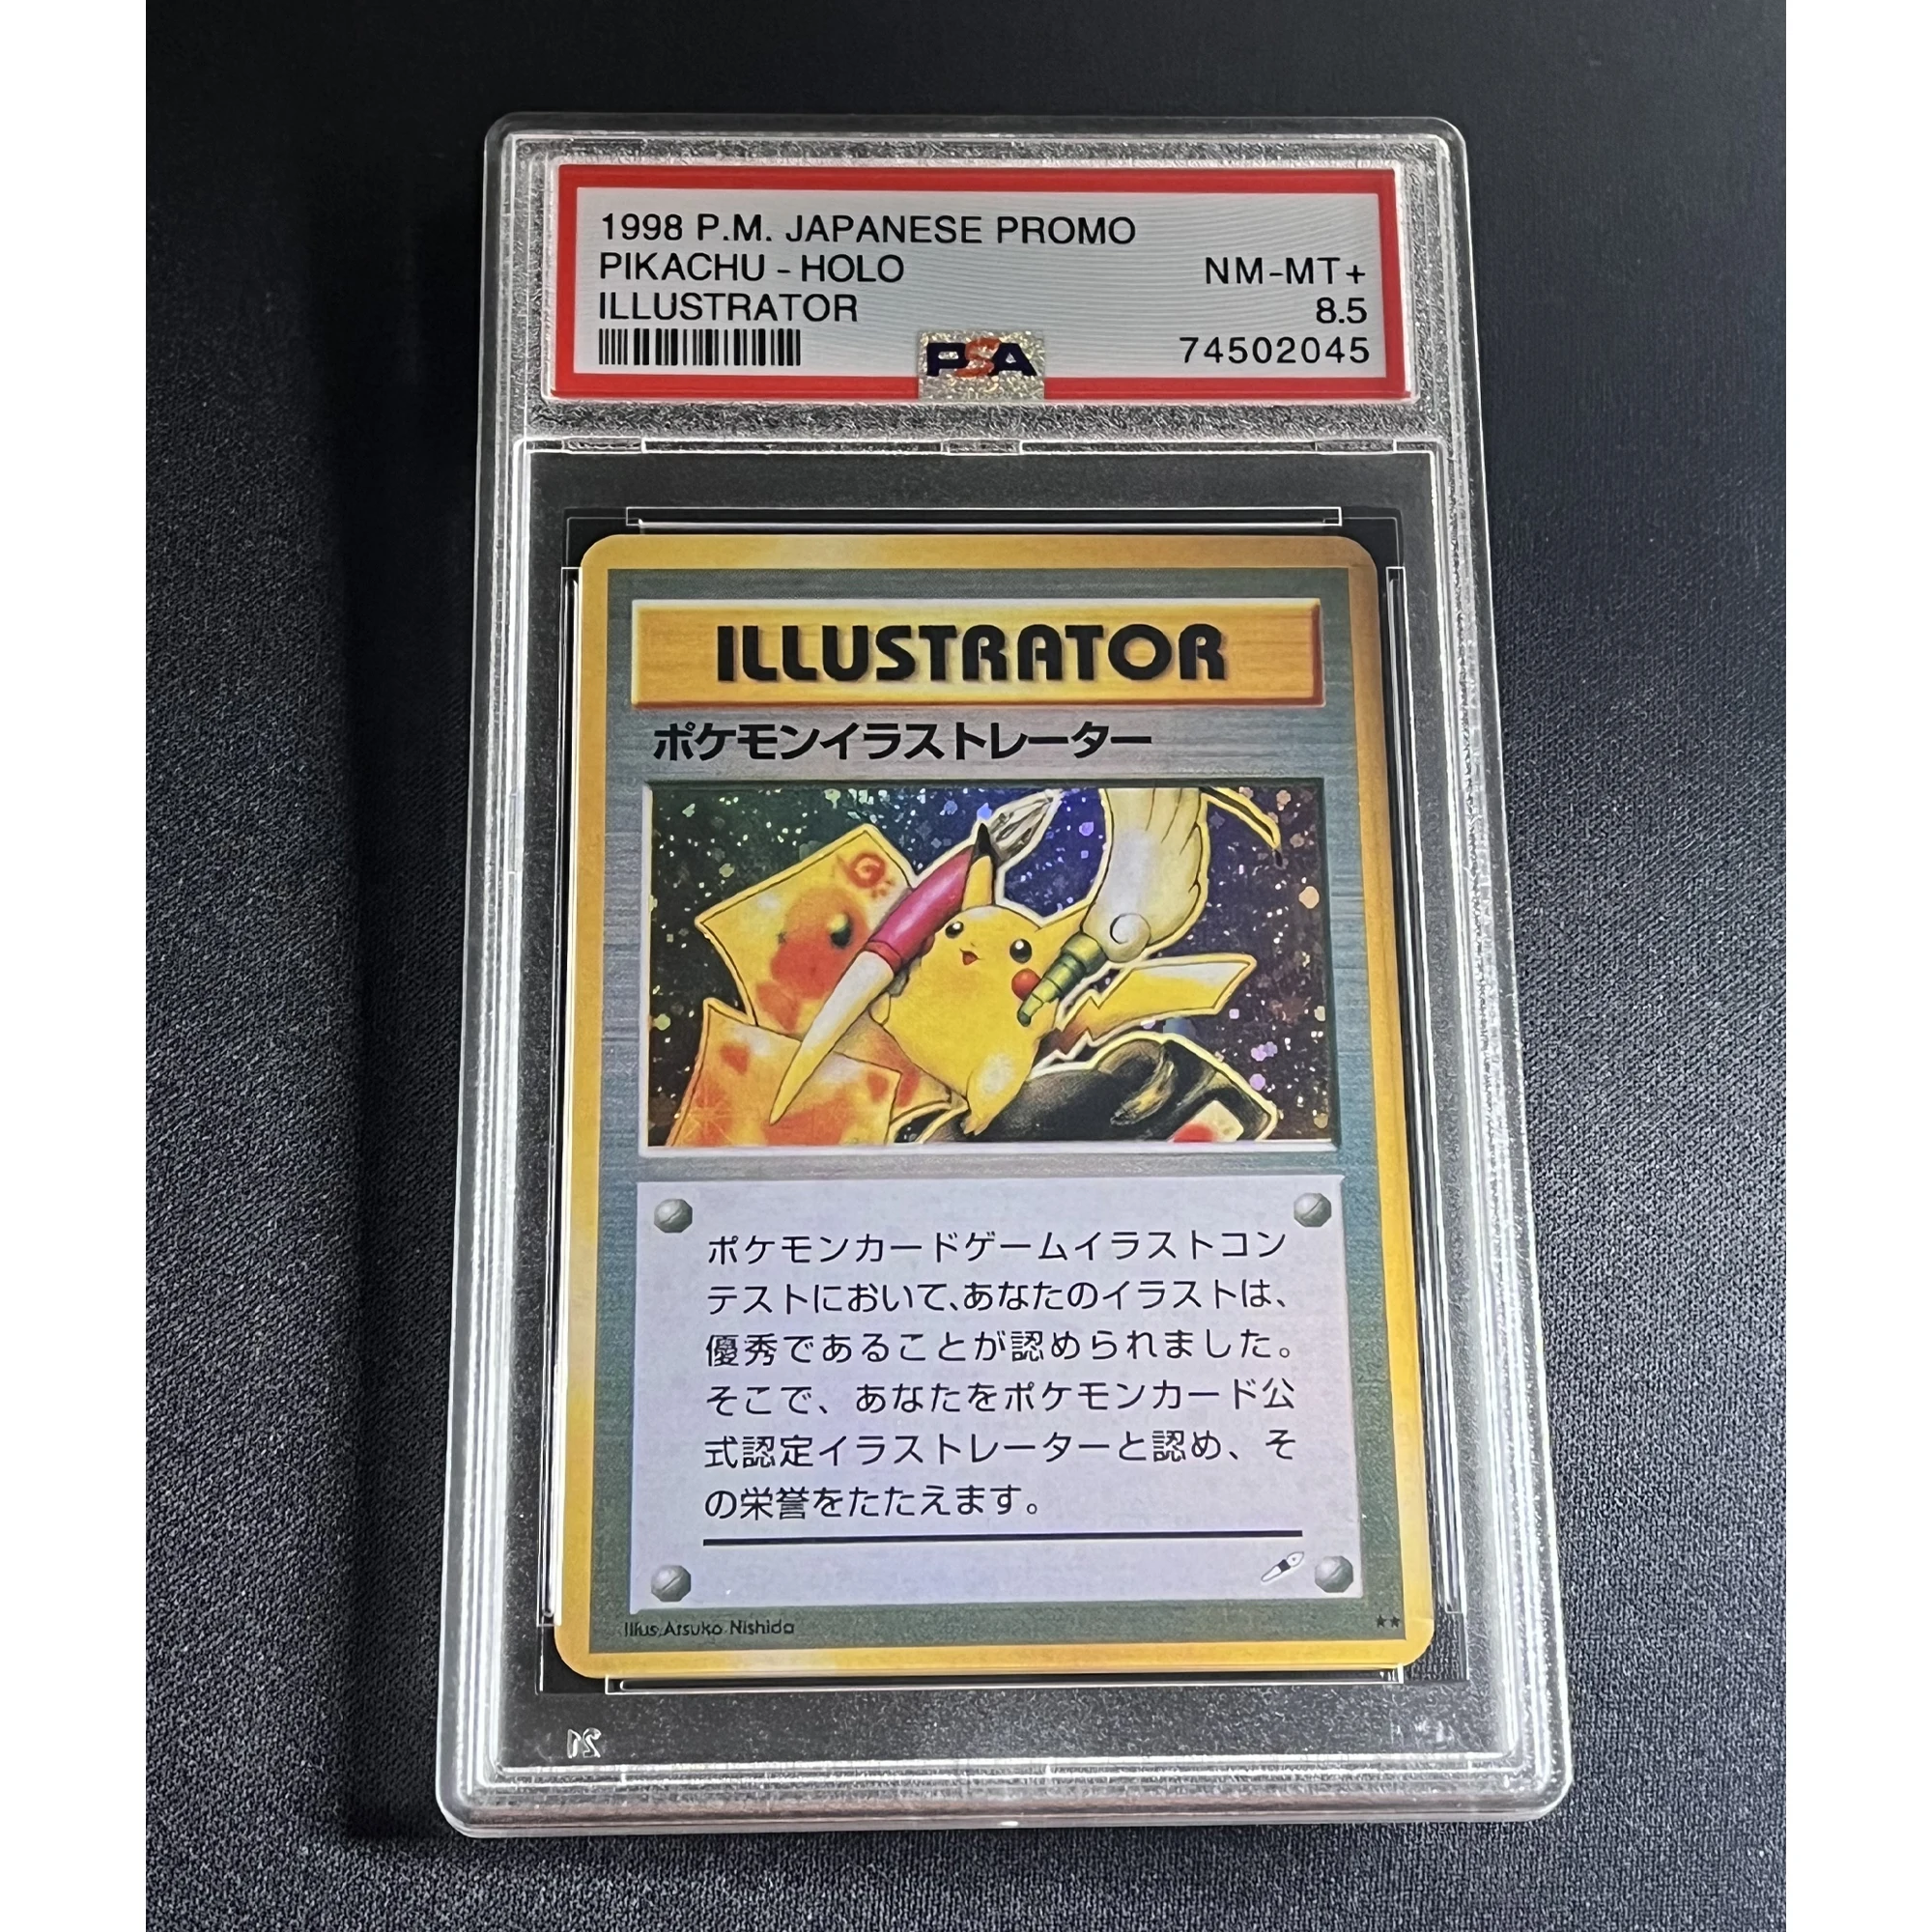 

PSA Pokemon Illustrator Pikachu Collection Card PTCG Copy Version 8.5Points Rating Card Gift Toys Anime Game Card